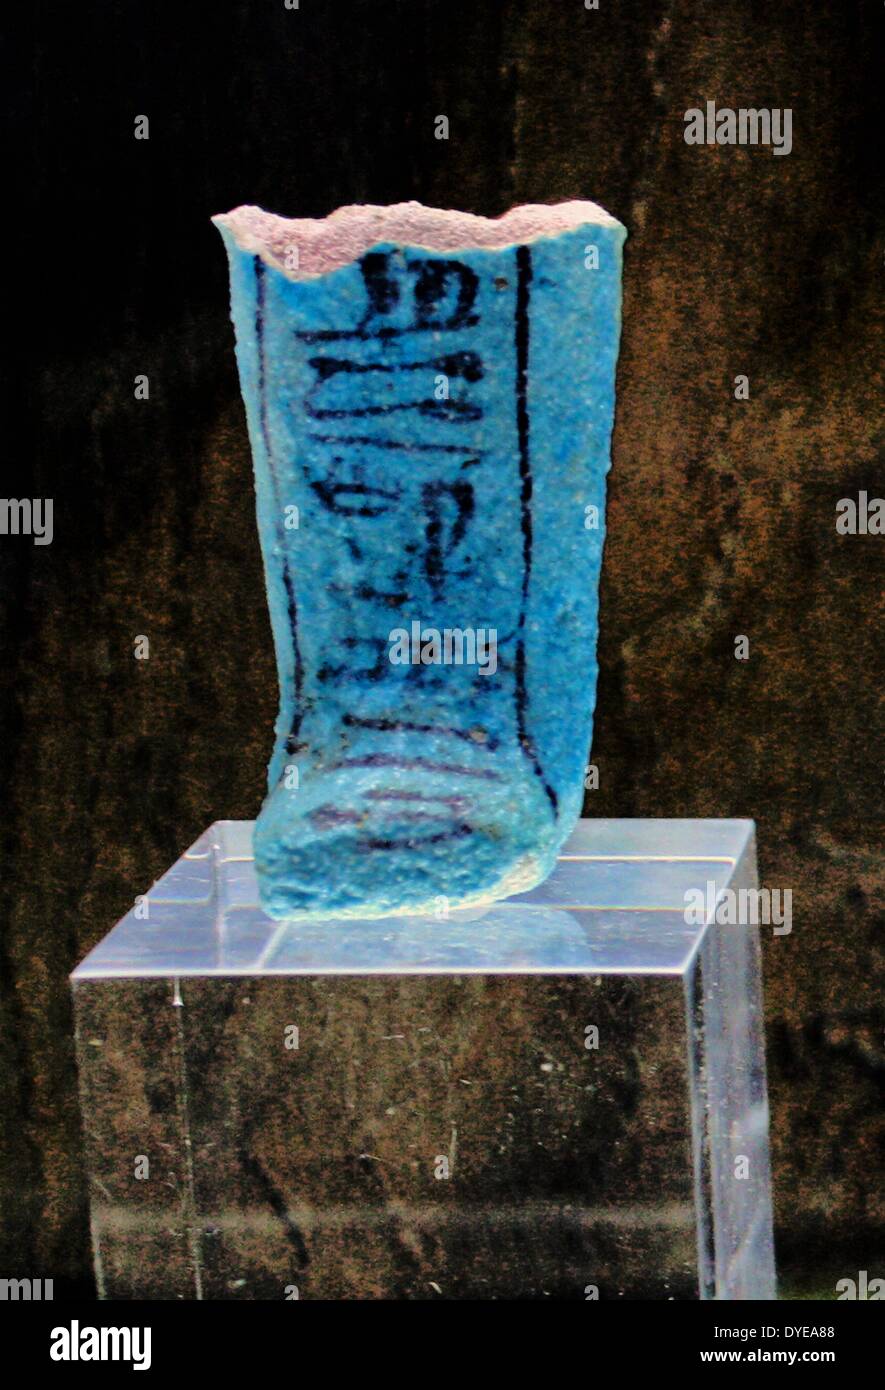 A Egipto nativo de objeto creado a partir de la piedra preciosa semi- lapislázuli. Parte de un mini sarcófago. Barcelona. España 2013 Foto de stock